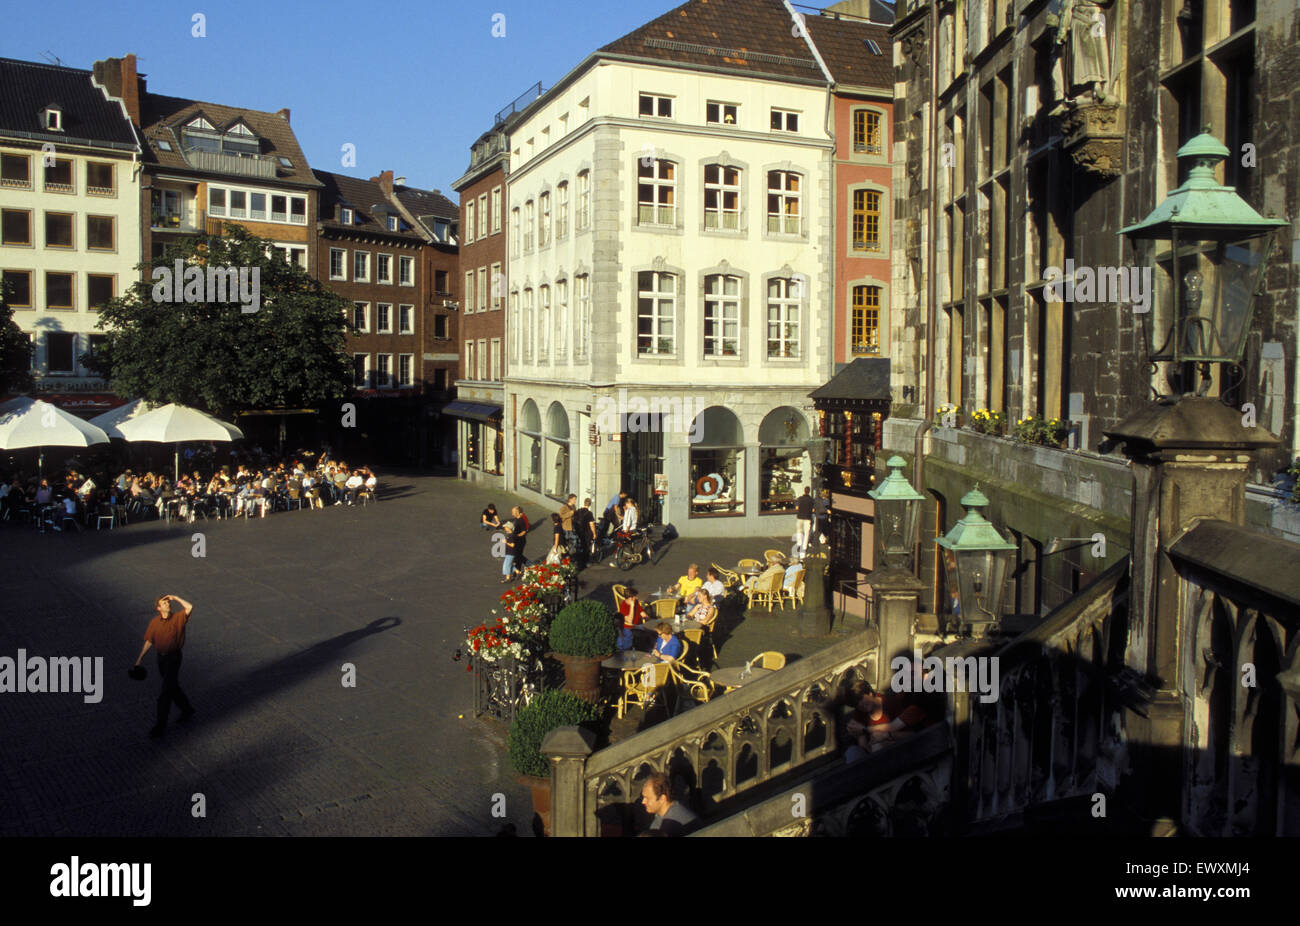 DEU, Germany, Aachen, the market at the town hall.  DEU, Deutschland, Aachen, der Markt am Rathaus. Stock Photo